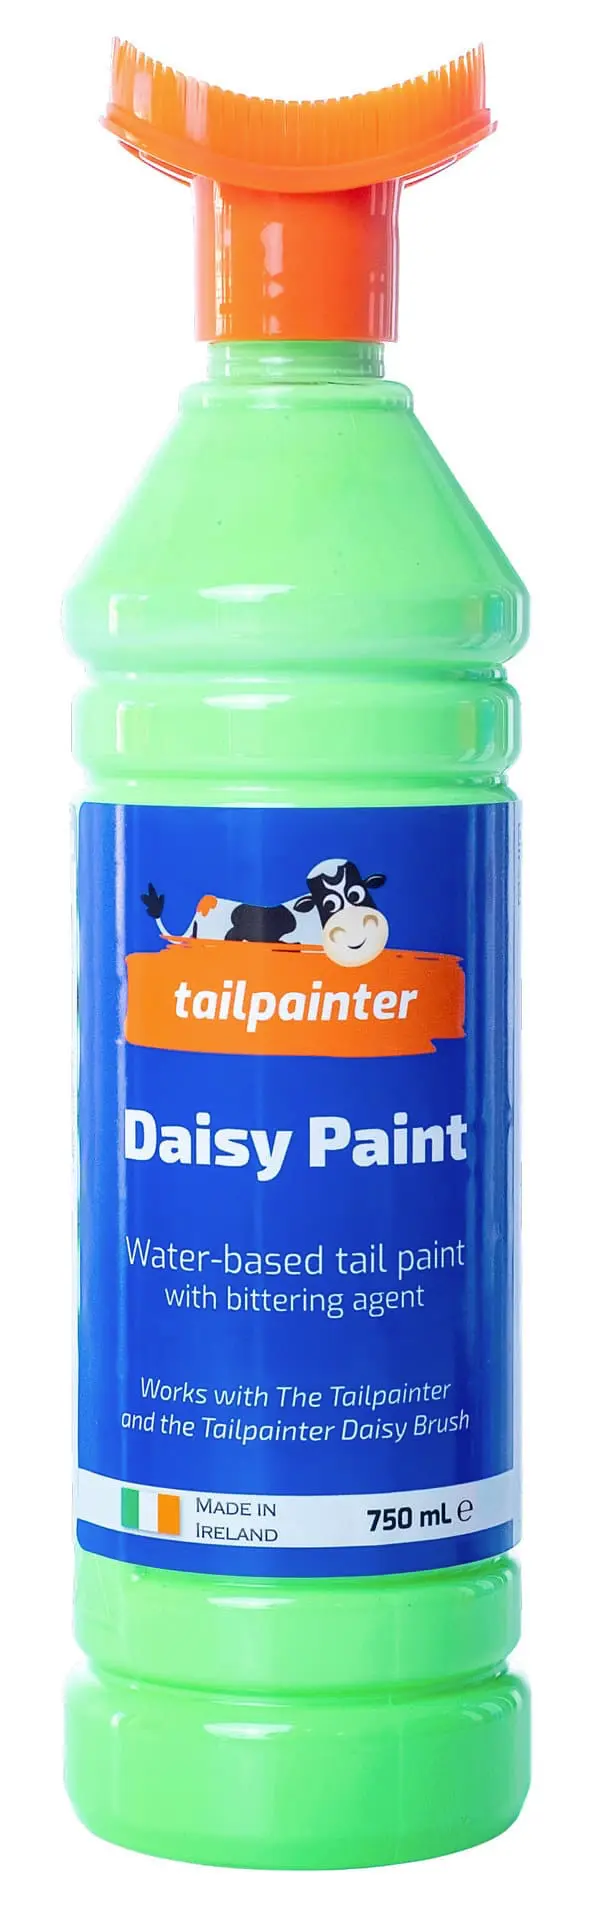 Daisy Paint incl. Brush, green, 750 ml